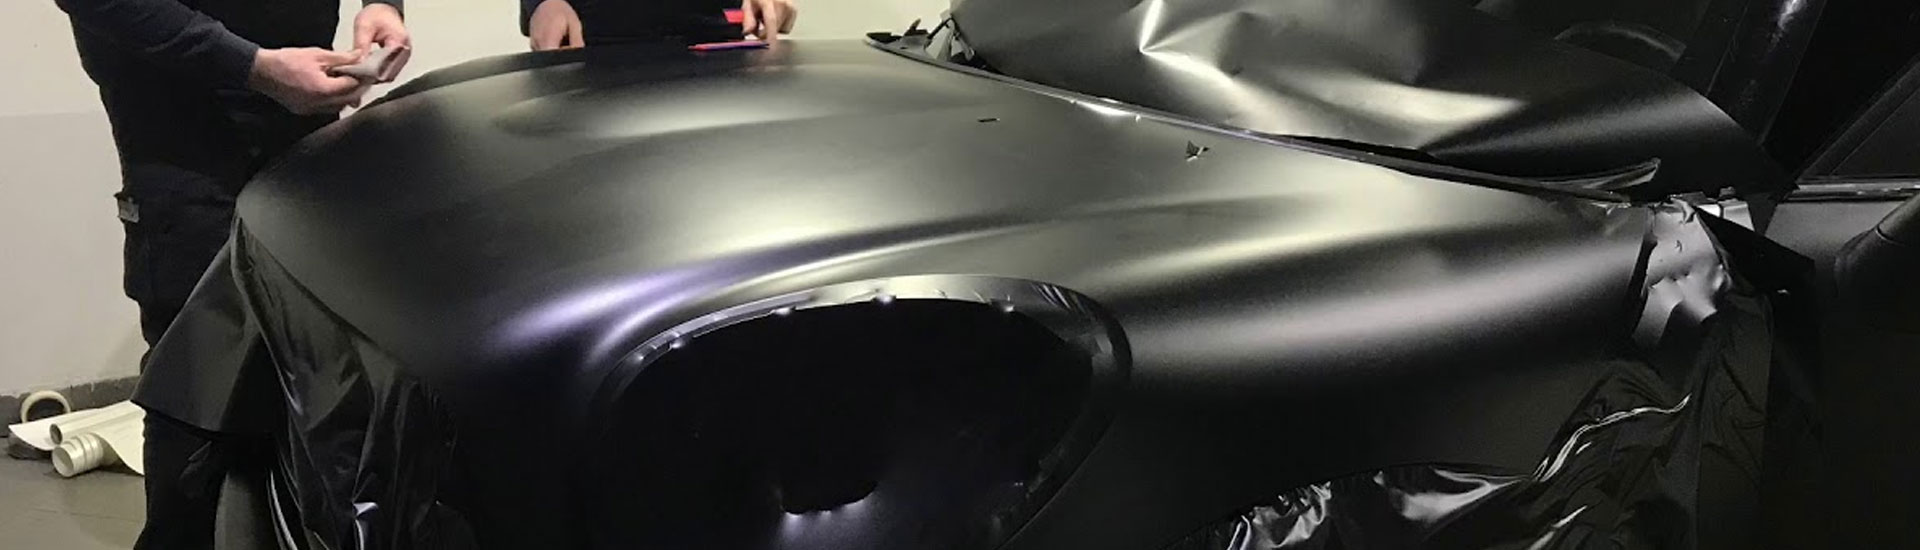 Matte Black Car Wraps - What's Next?